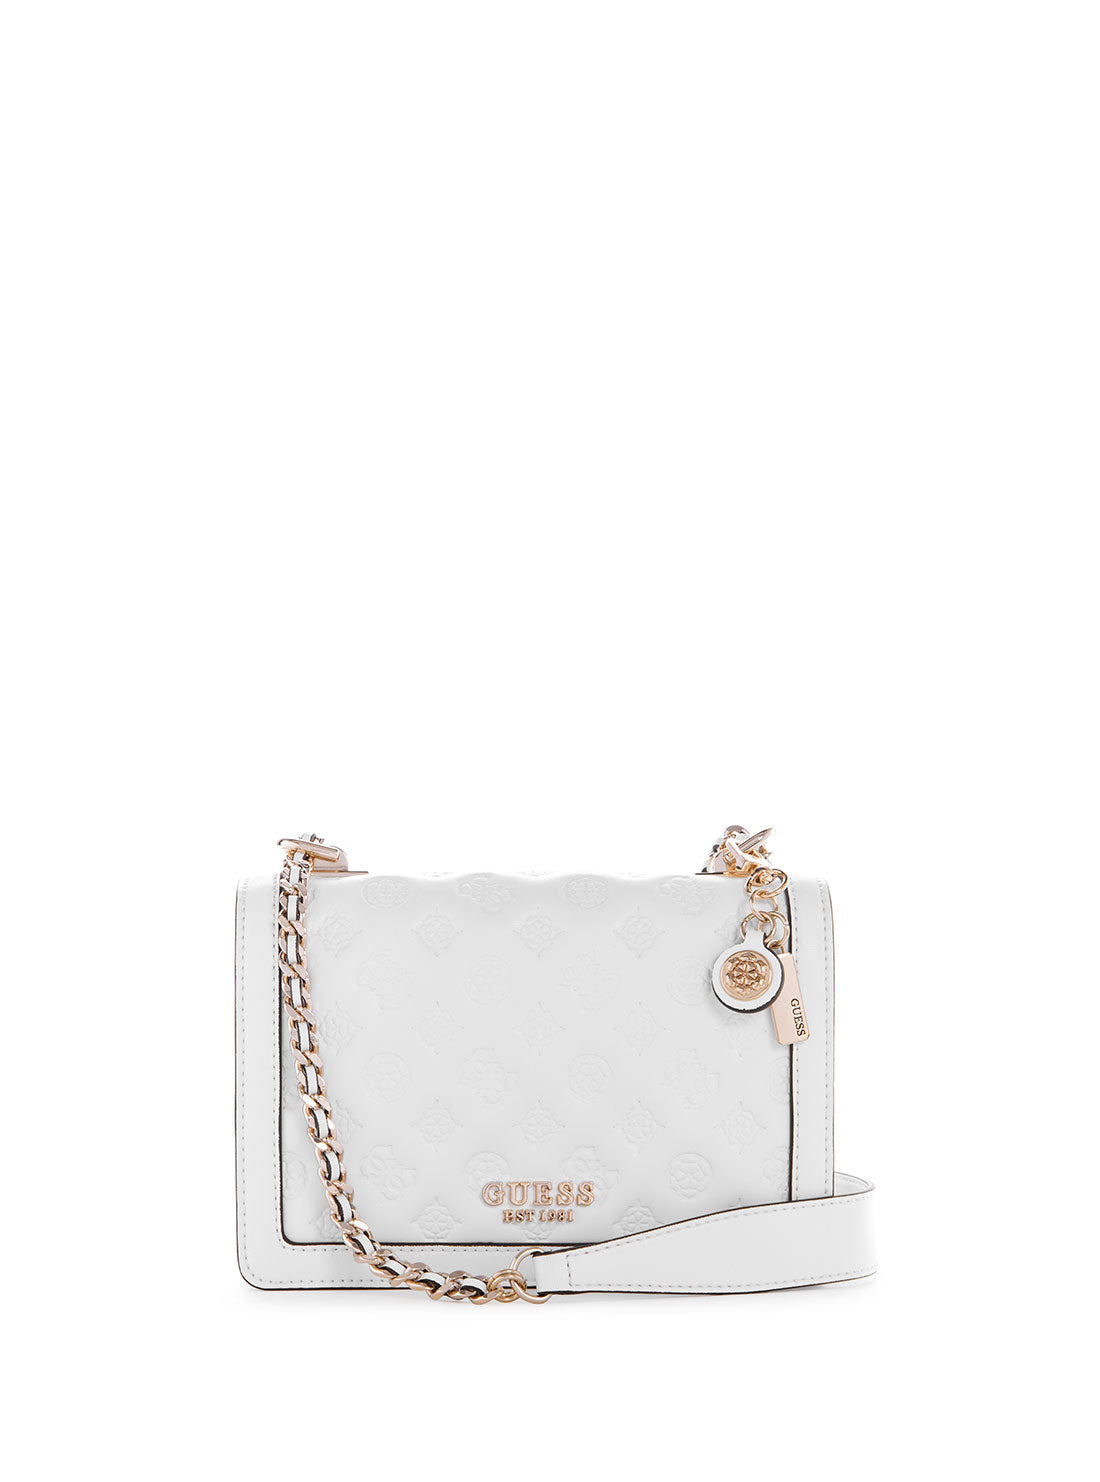 GUESS Women's White Abey Crossbody Bag PD855819 Front View